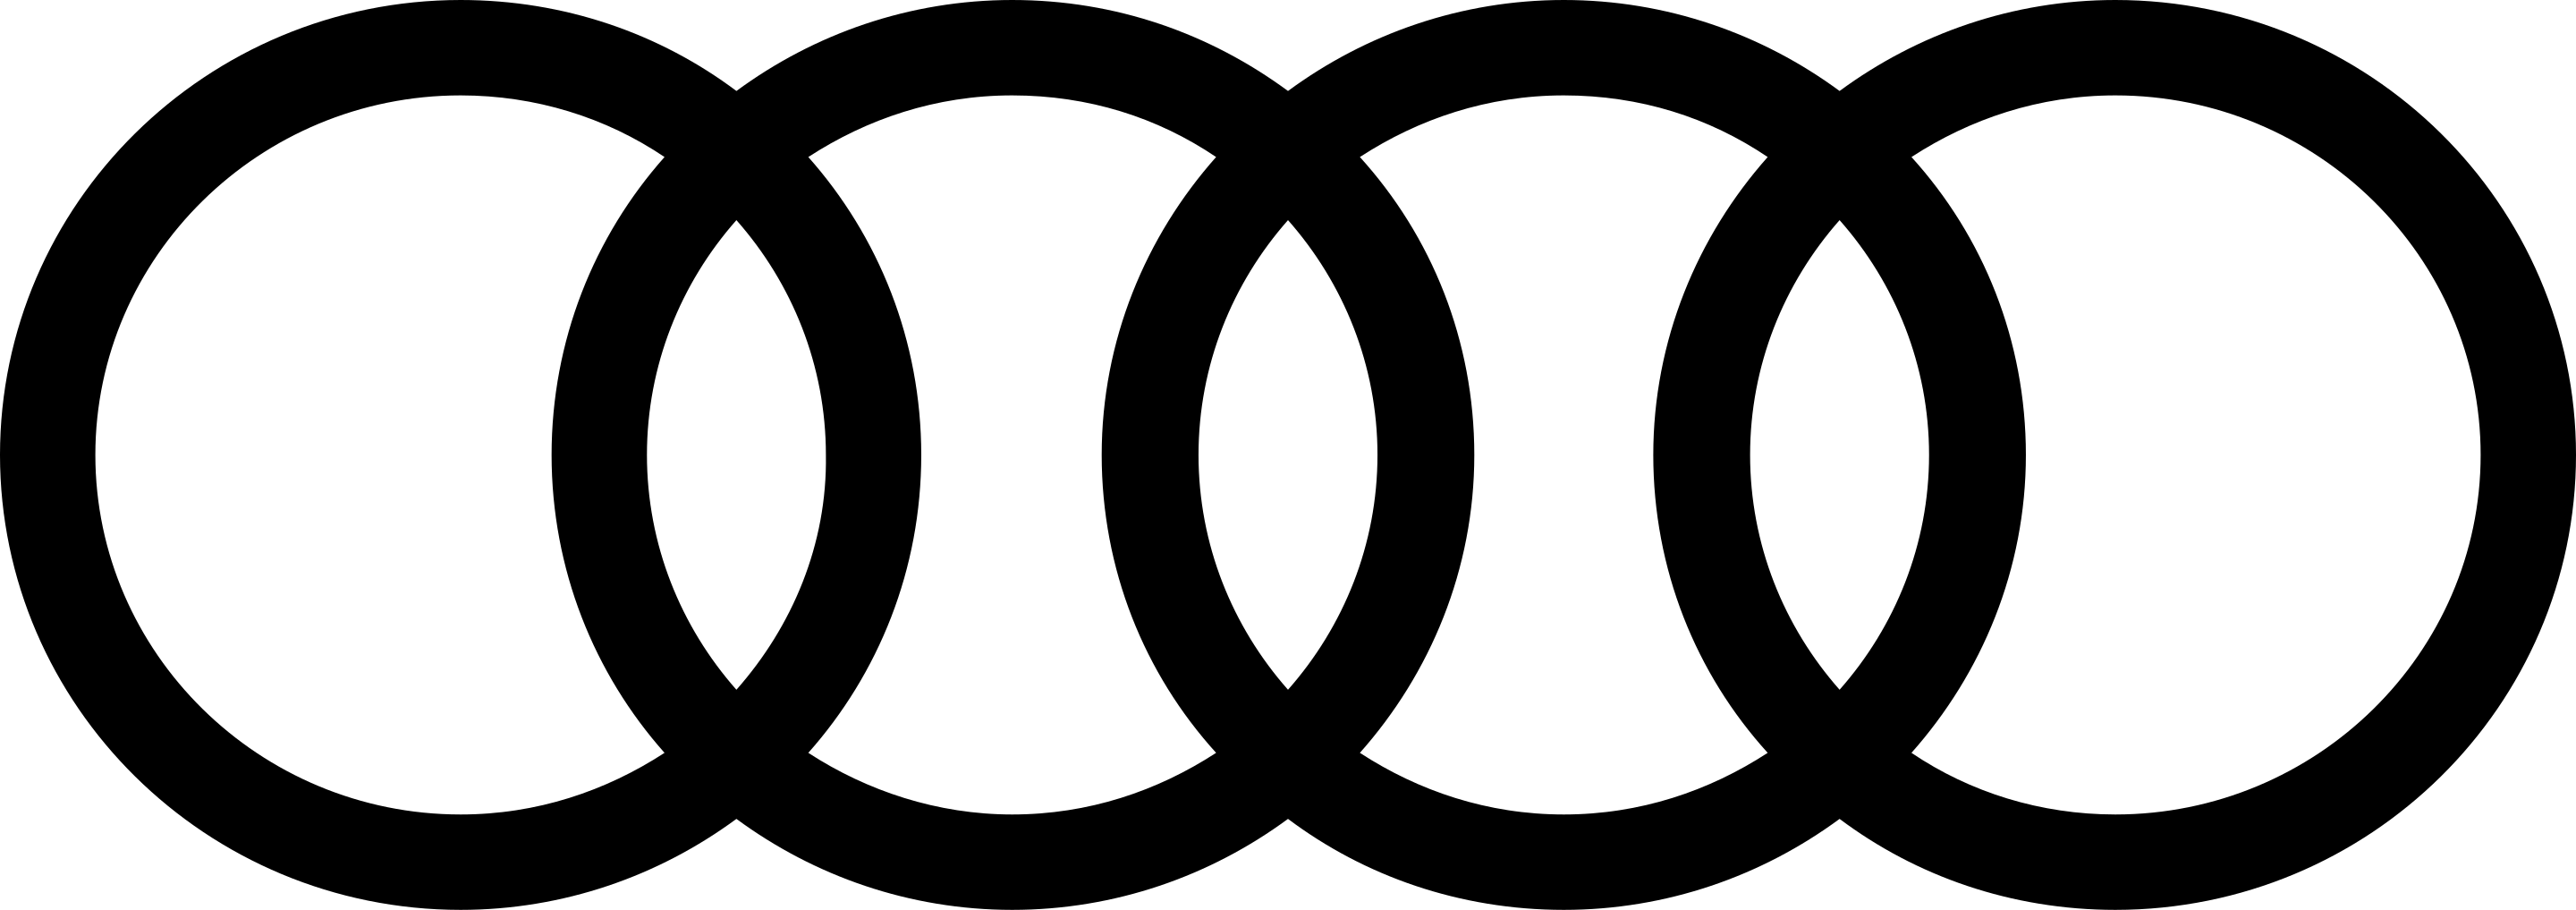 Logo Audi.DZNr CJv